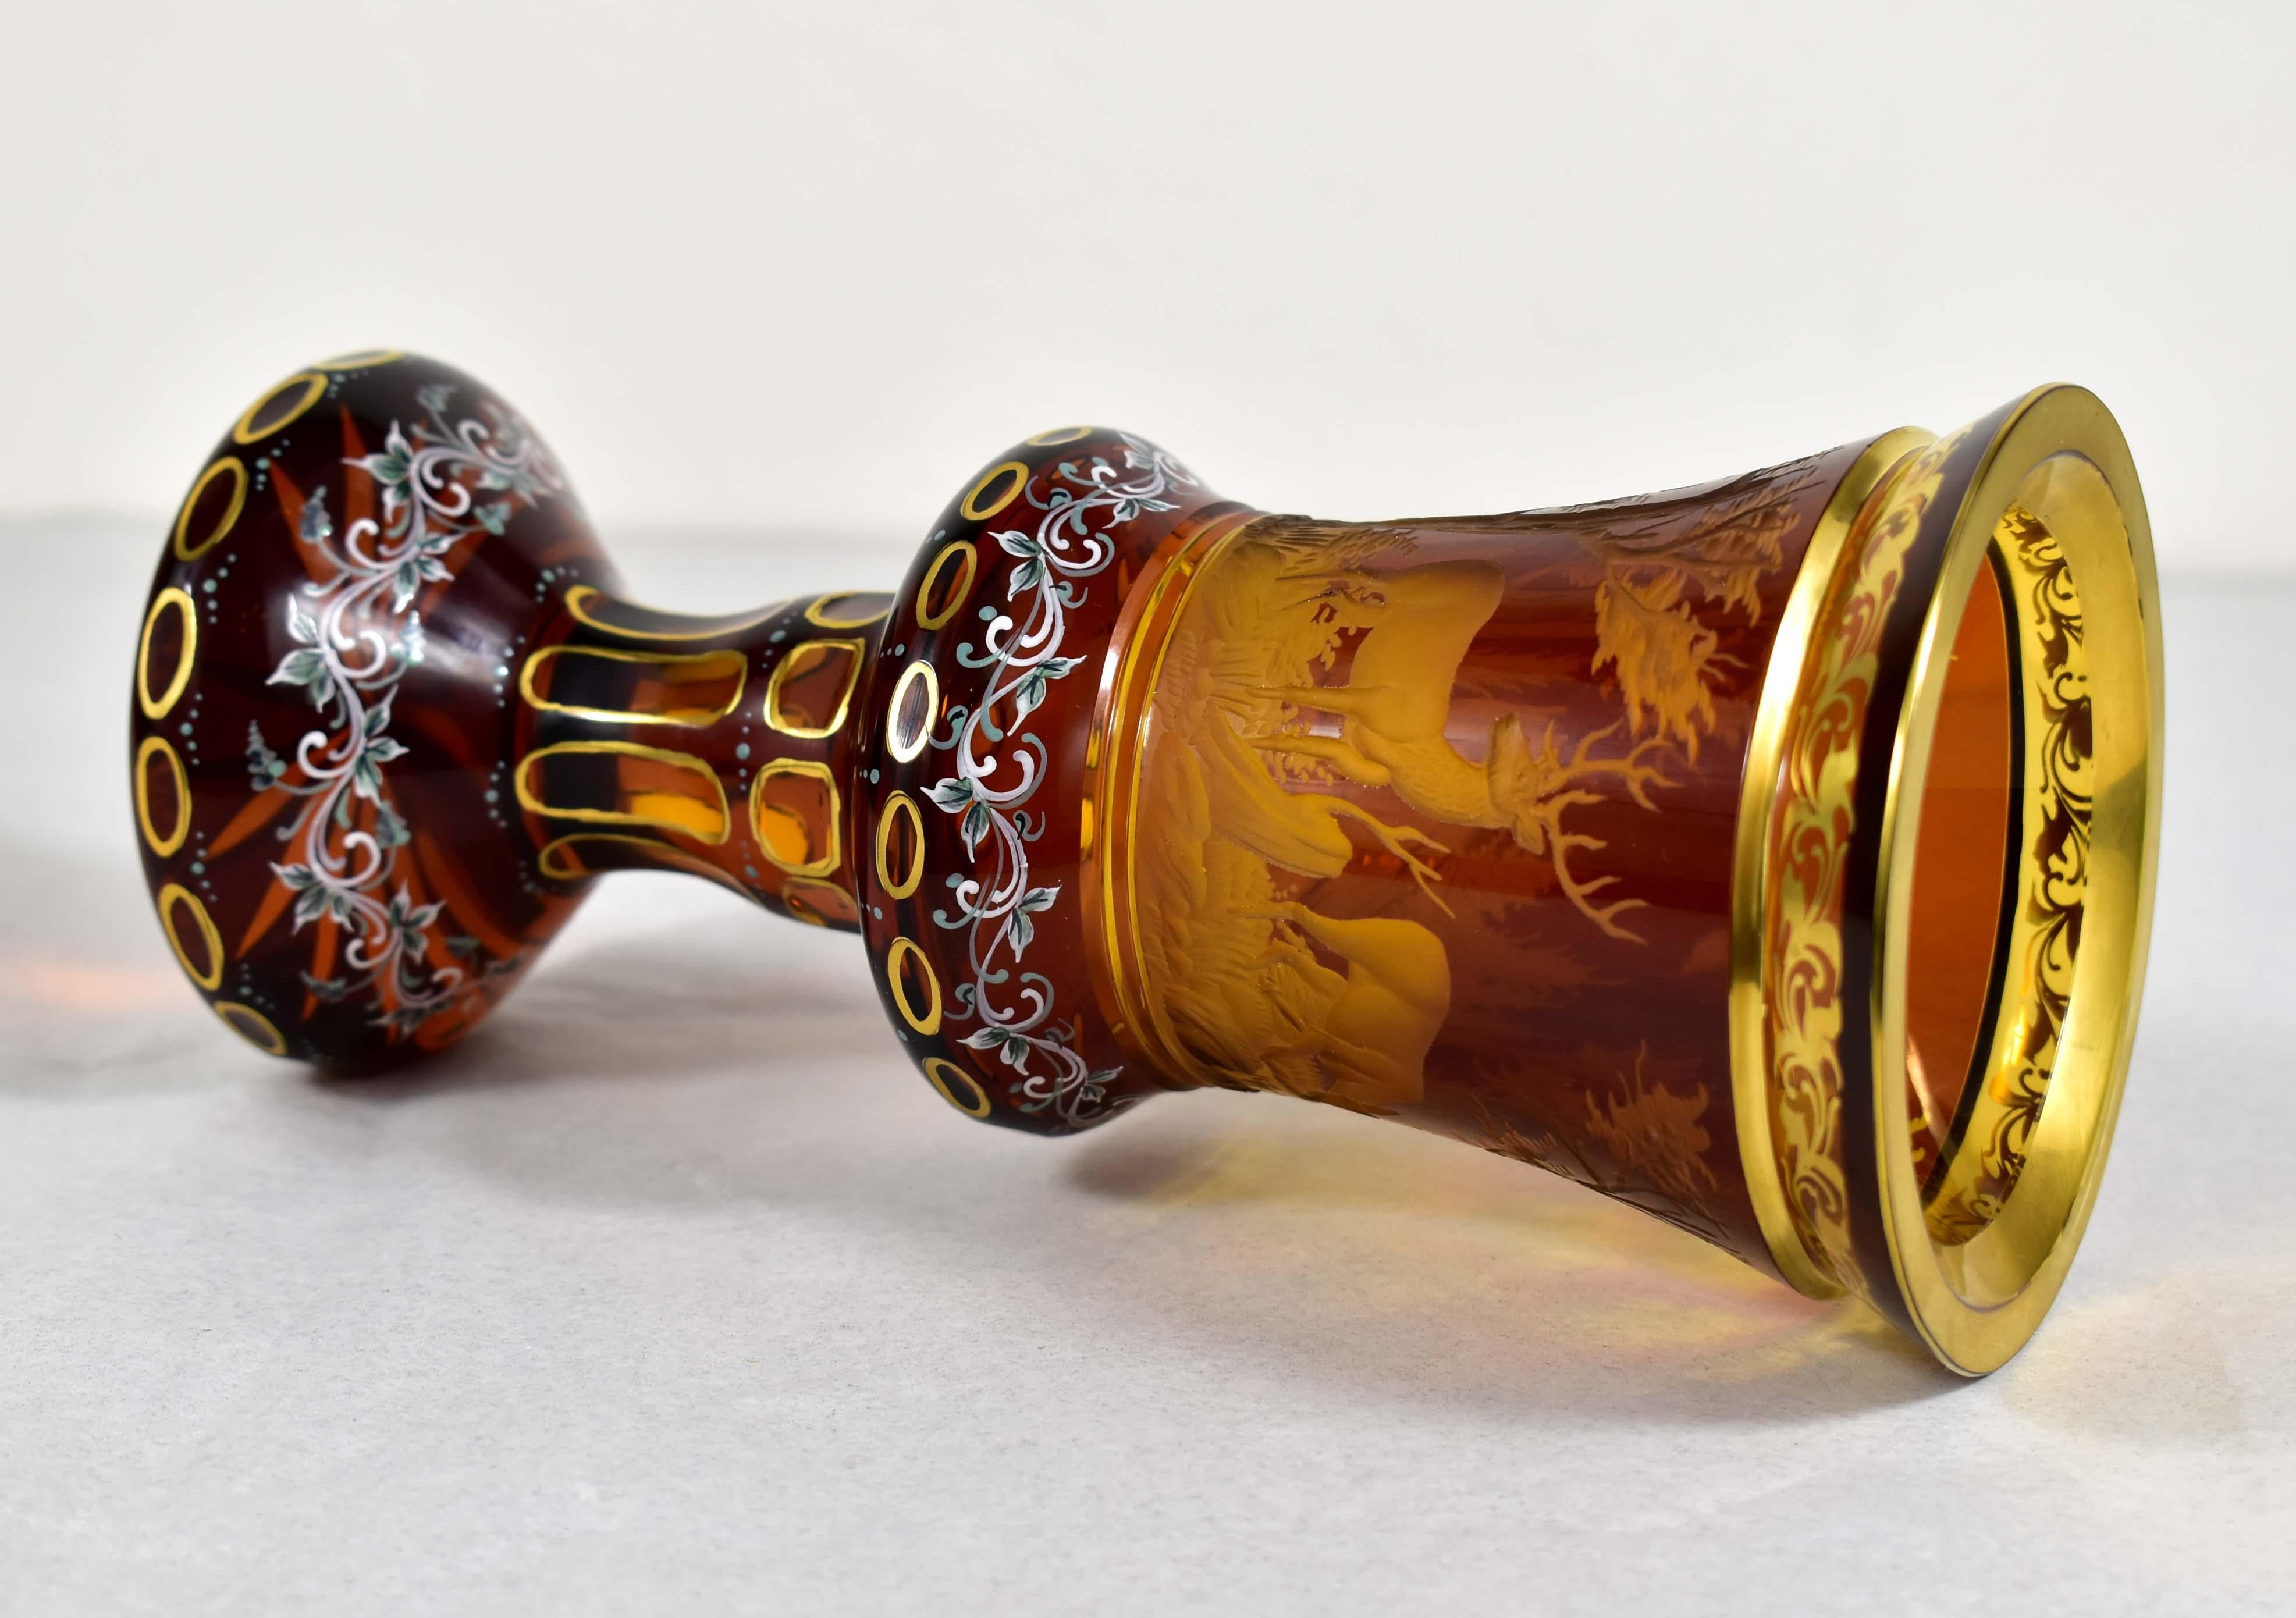 Amber Glass Goblet- Hunting motif - Bohemian Glass - 19-20 century 5